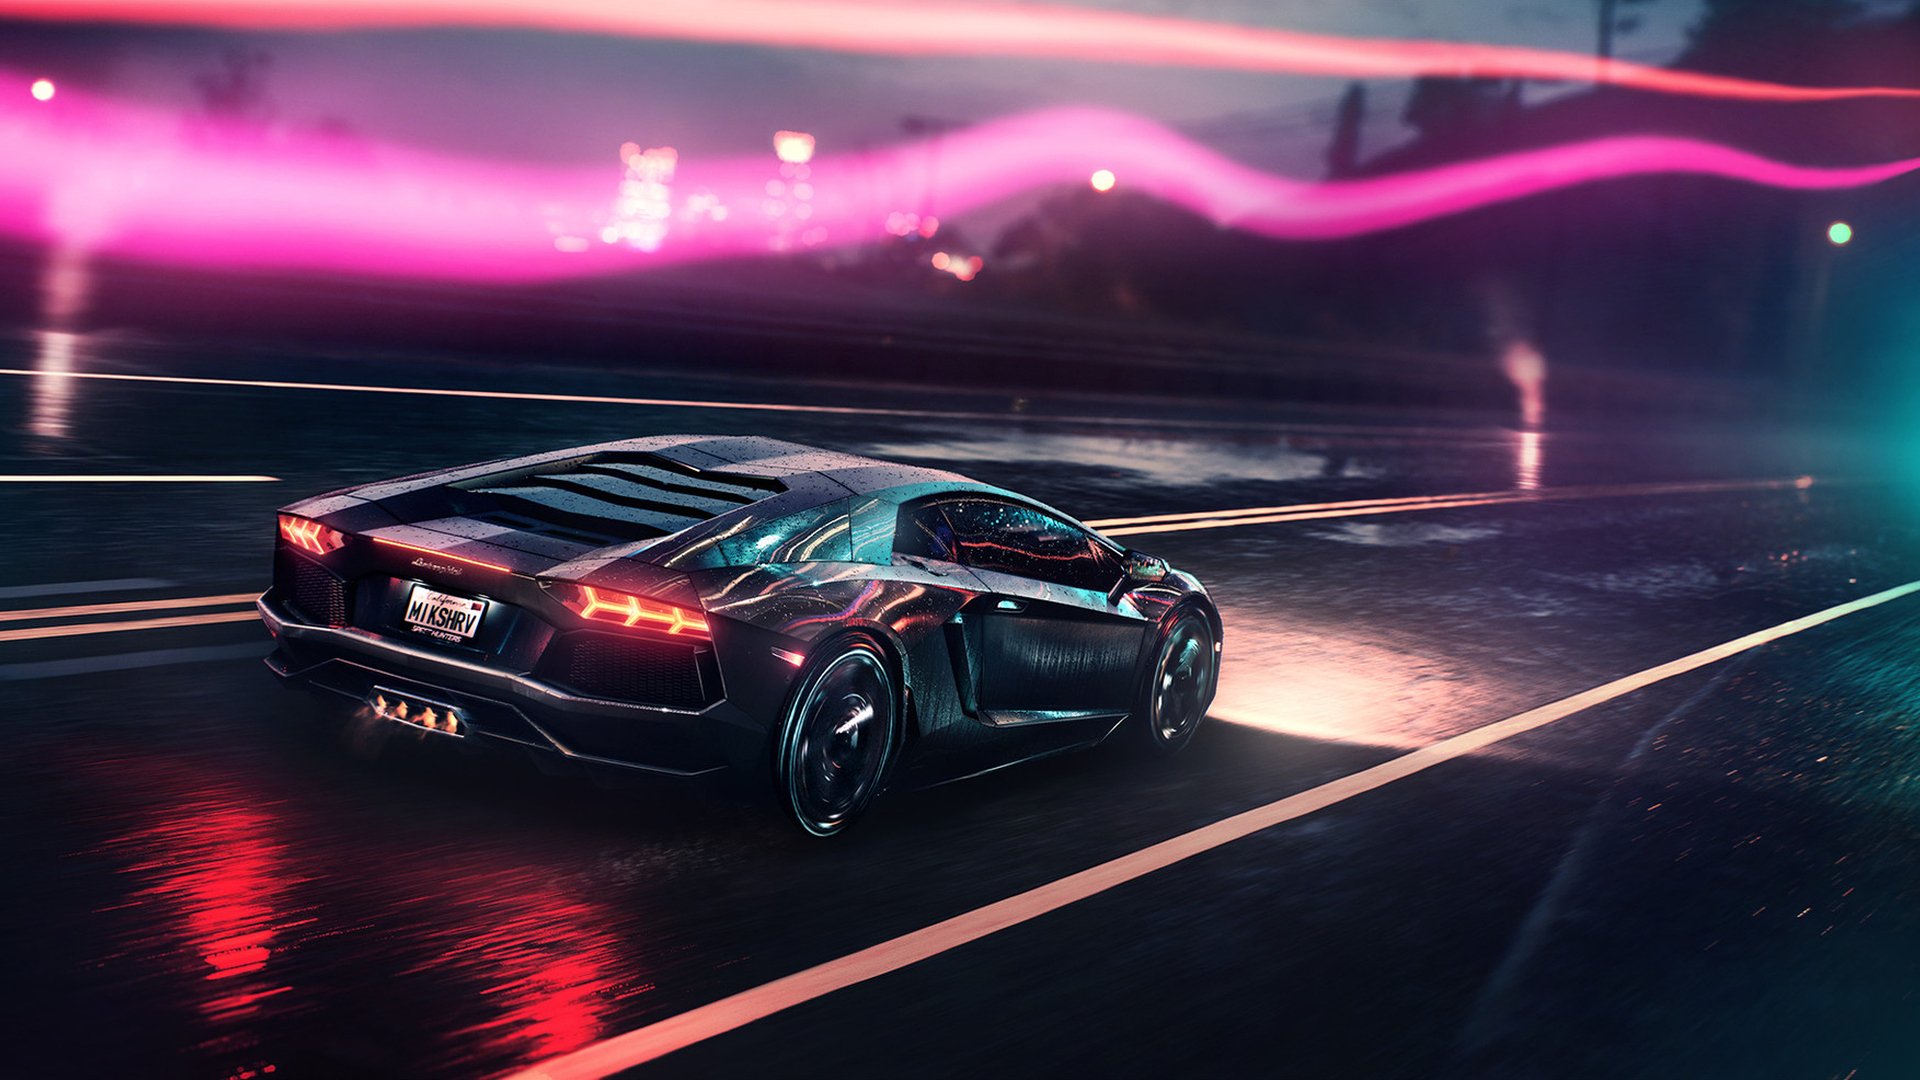 Awesome Lamborghini Car Wallpaper Hd images